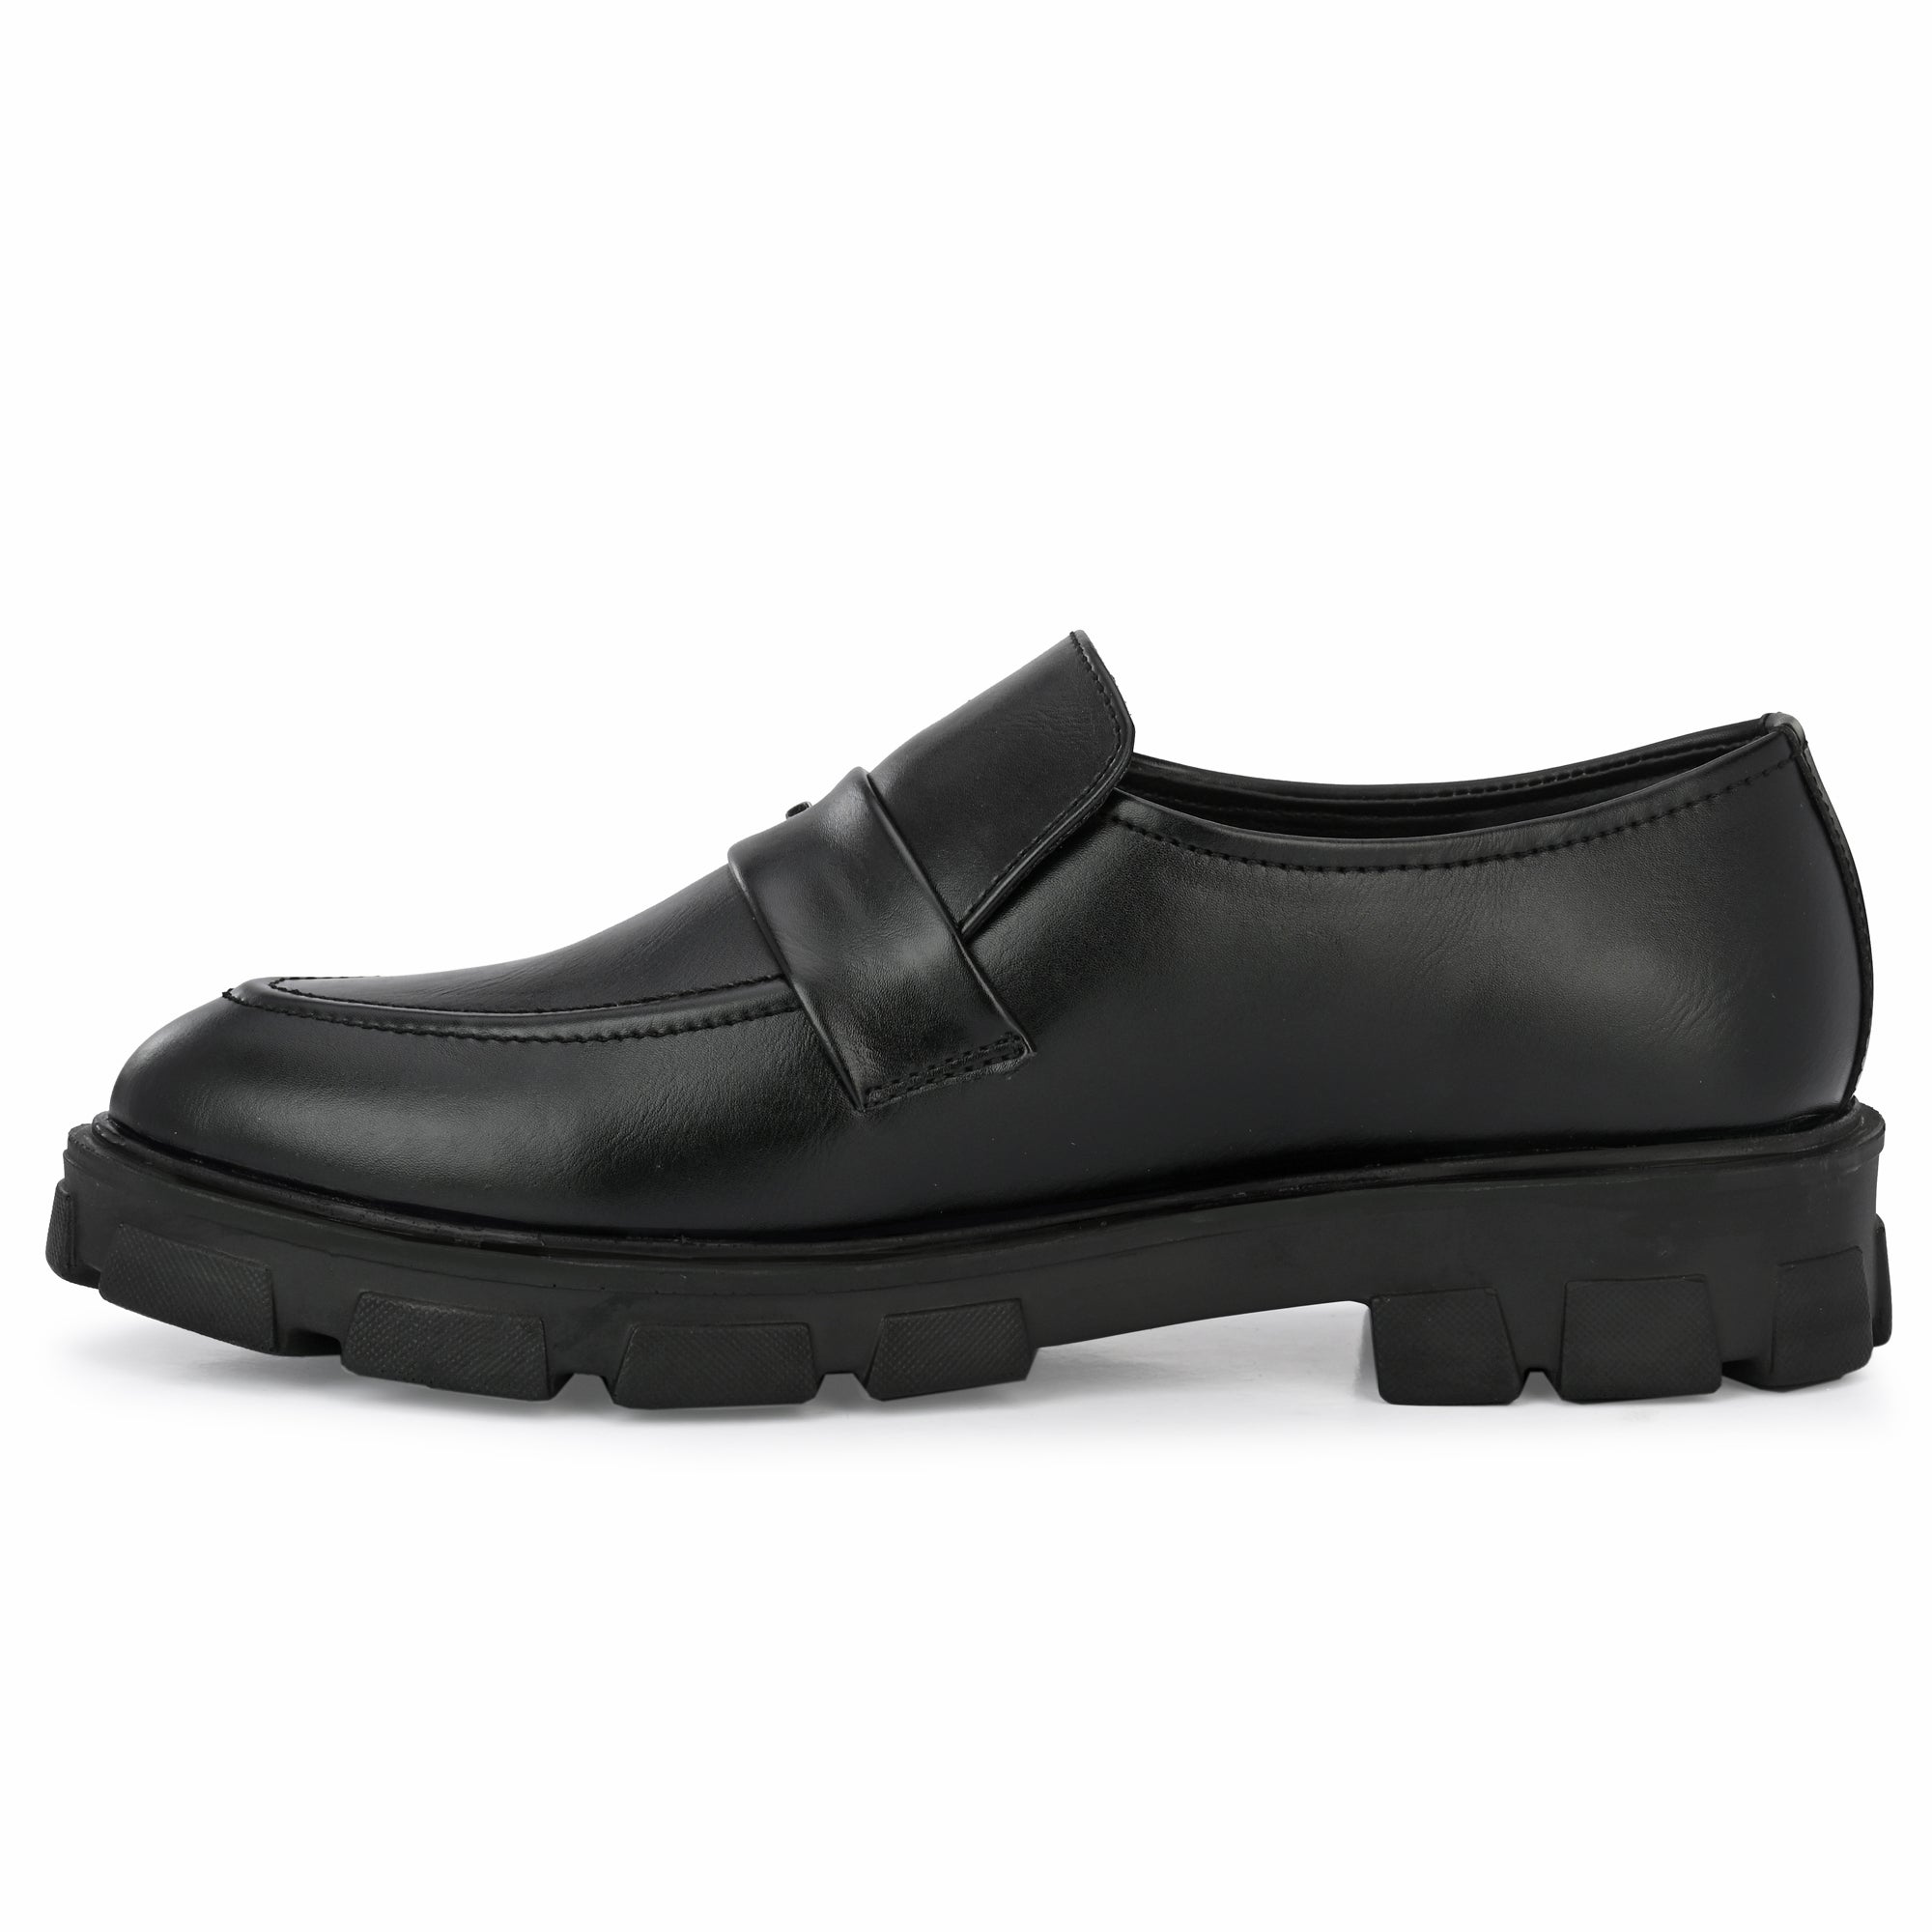 attitudist-black-high-heel-slip-on-penny-loafer-shoes-for-men